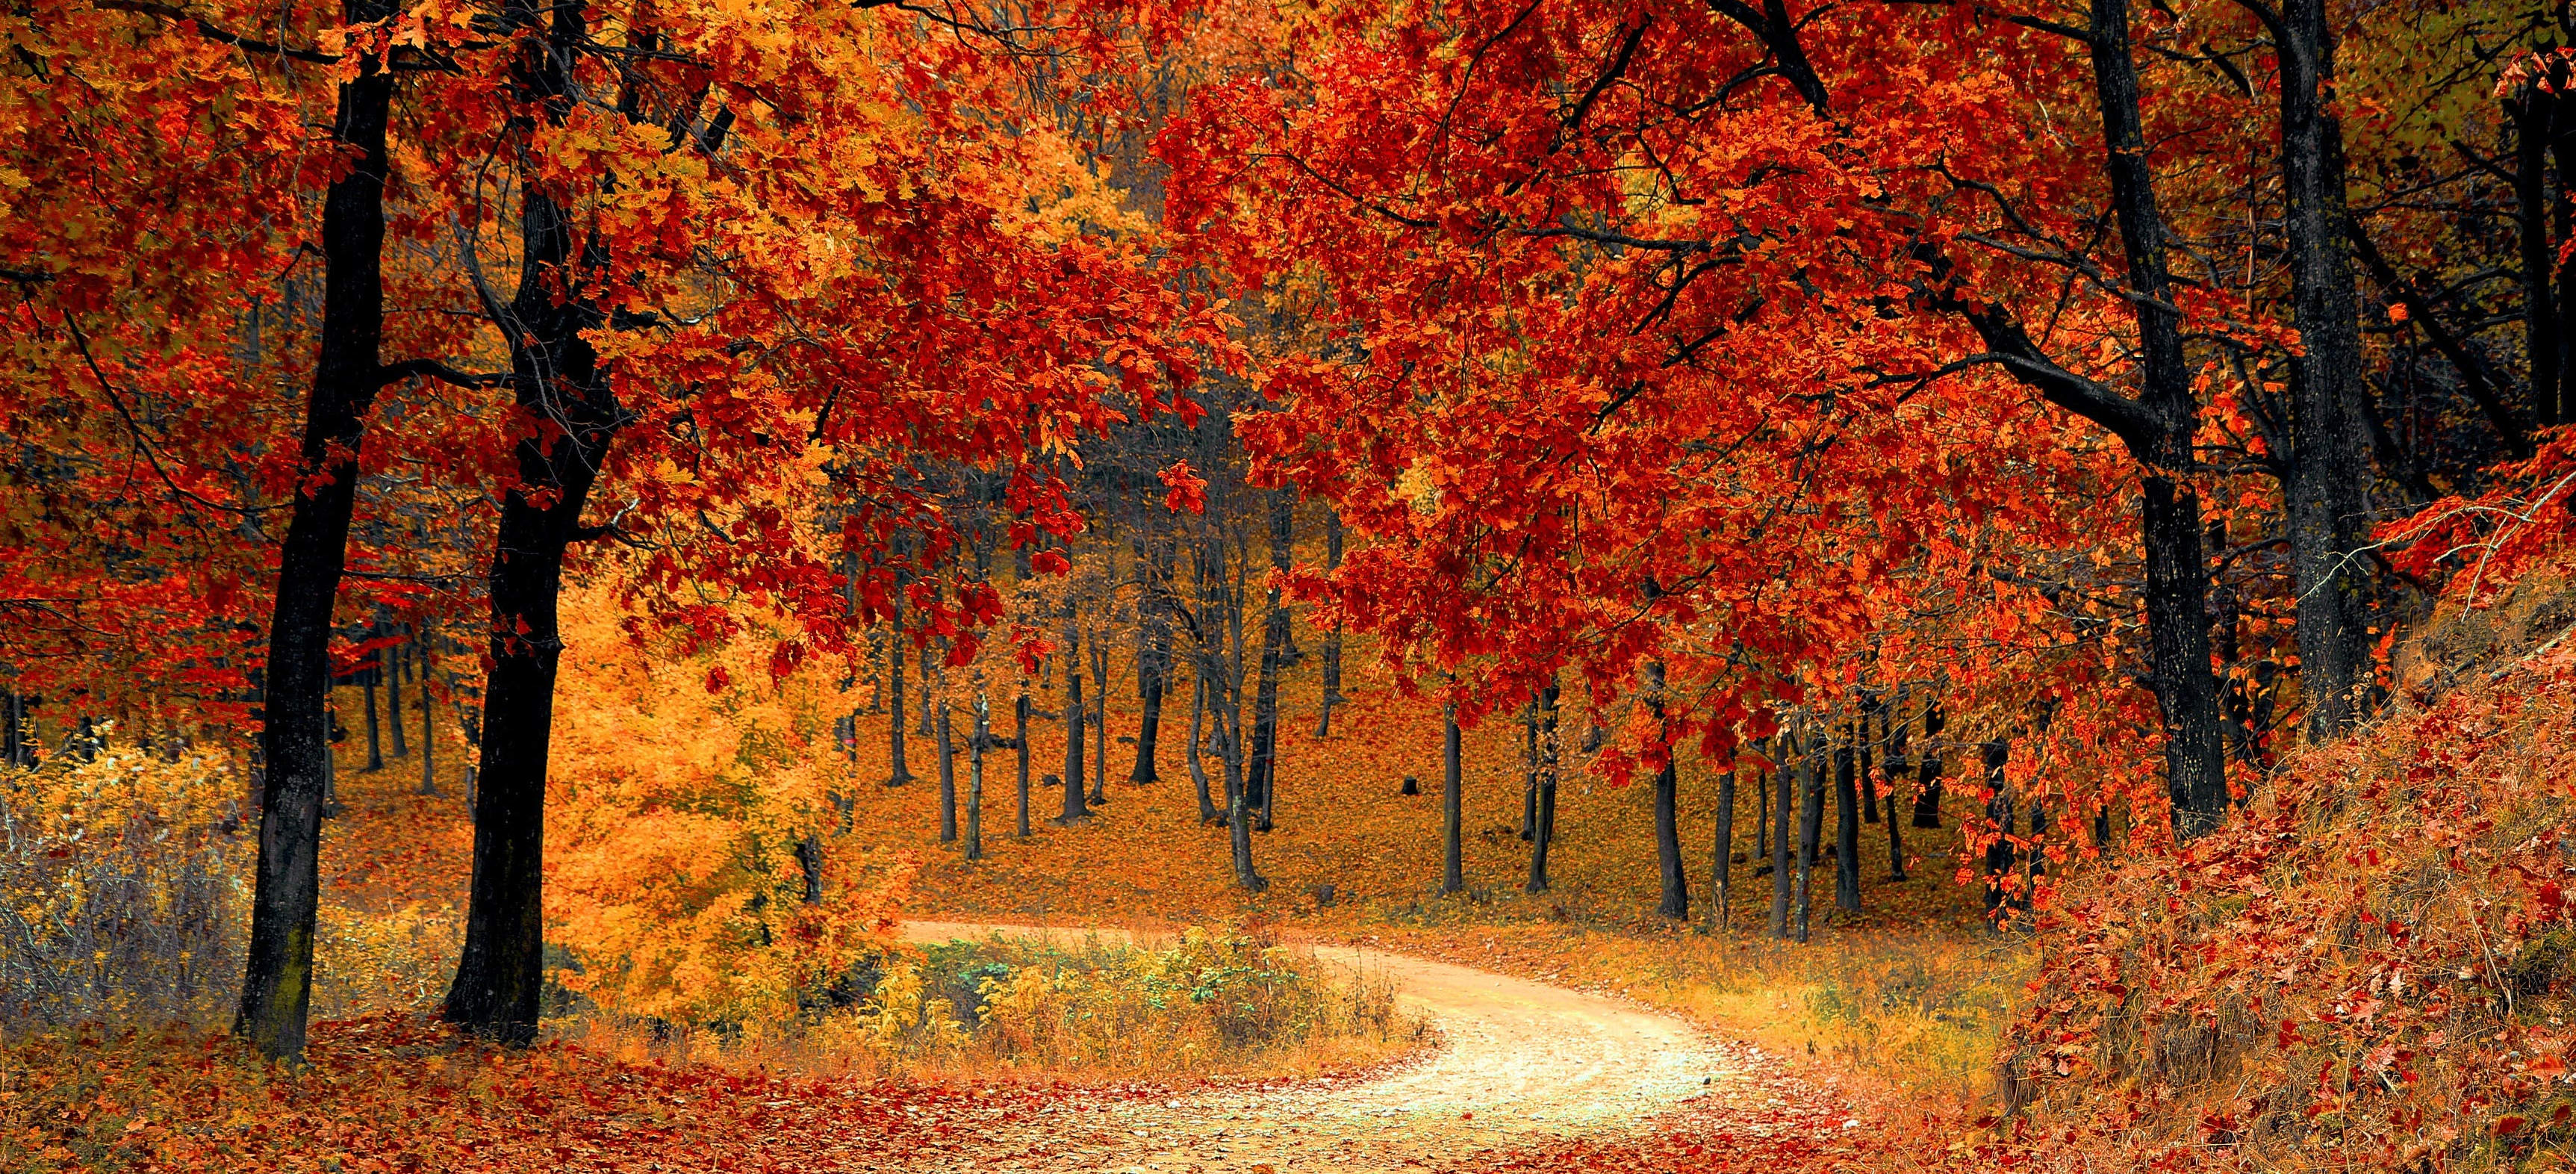 A scenic trail with bright orange autumn leaves }